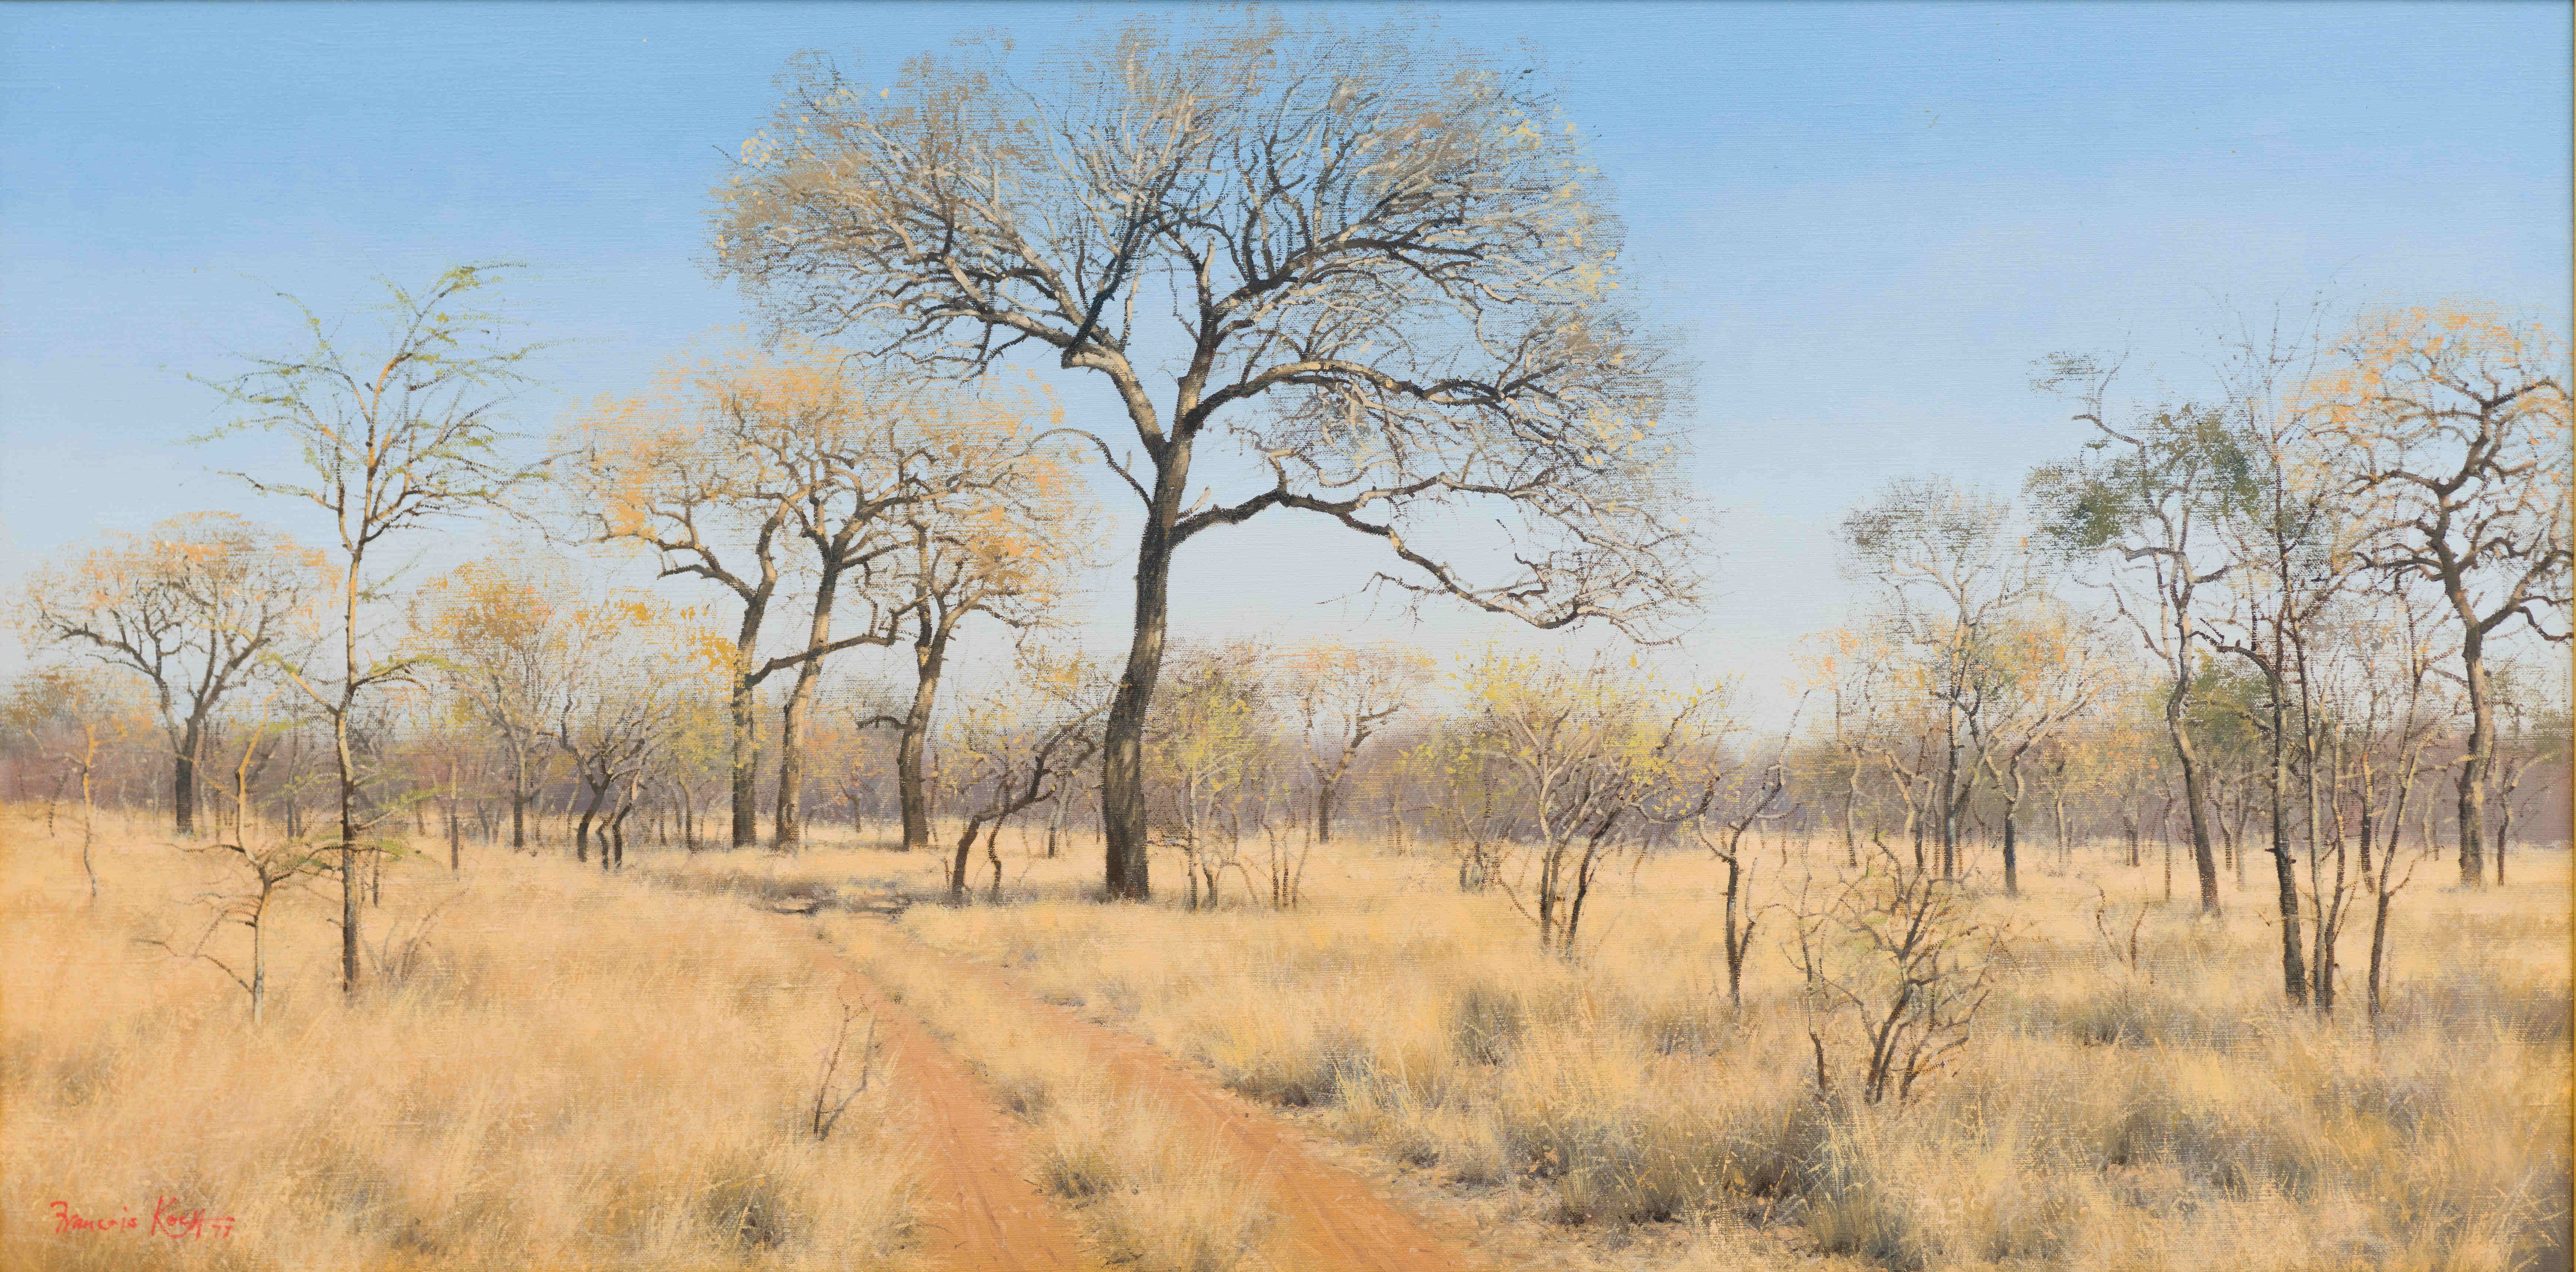 Francois Koch; Bushveld Scene